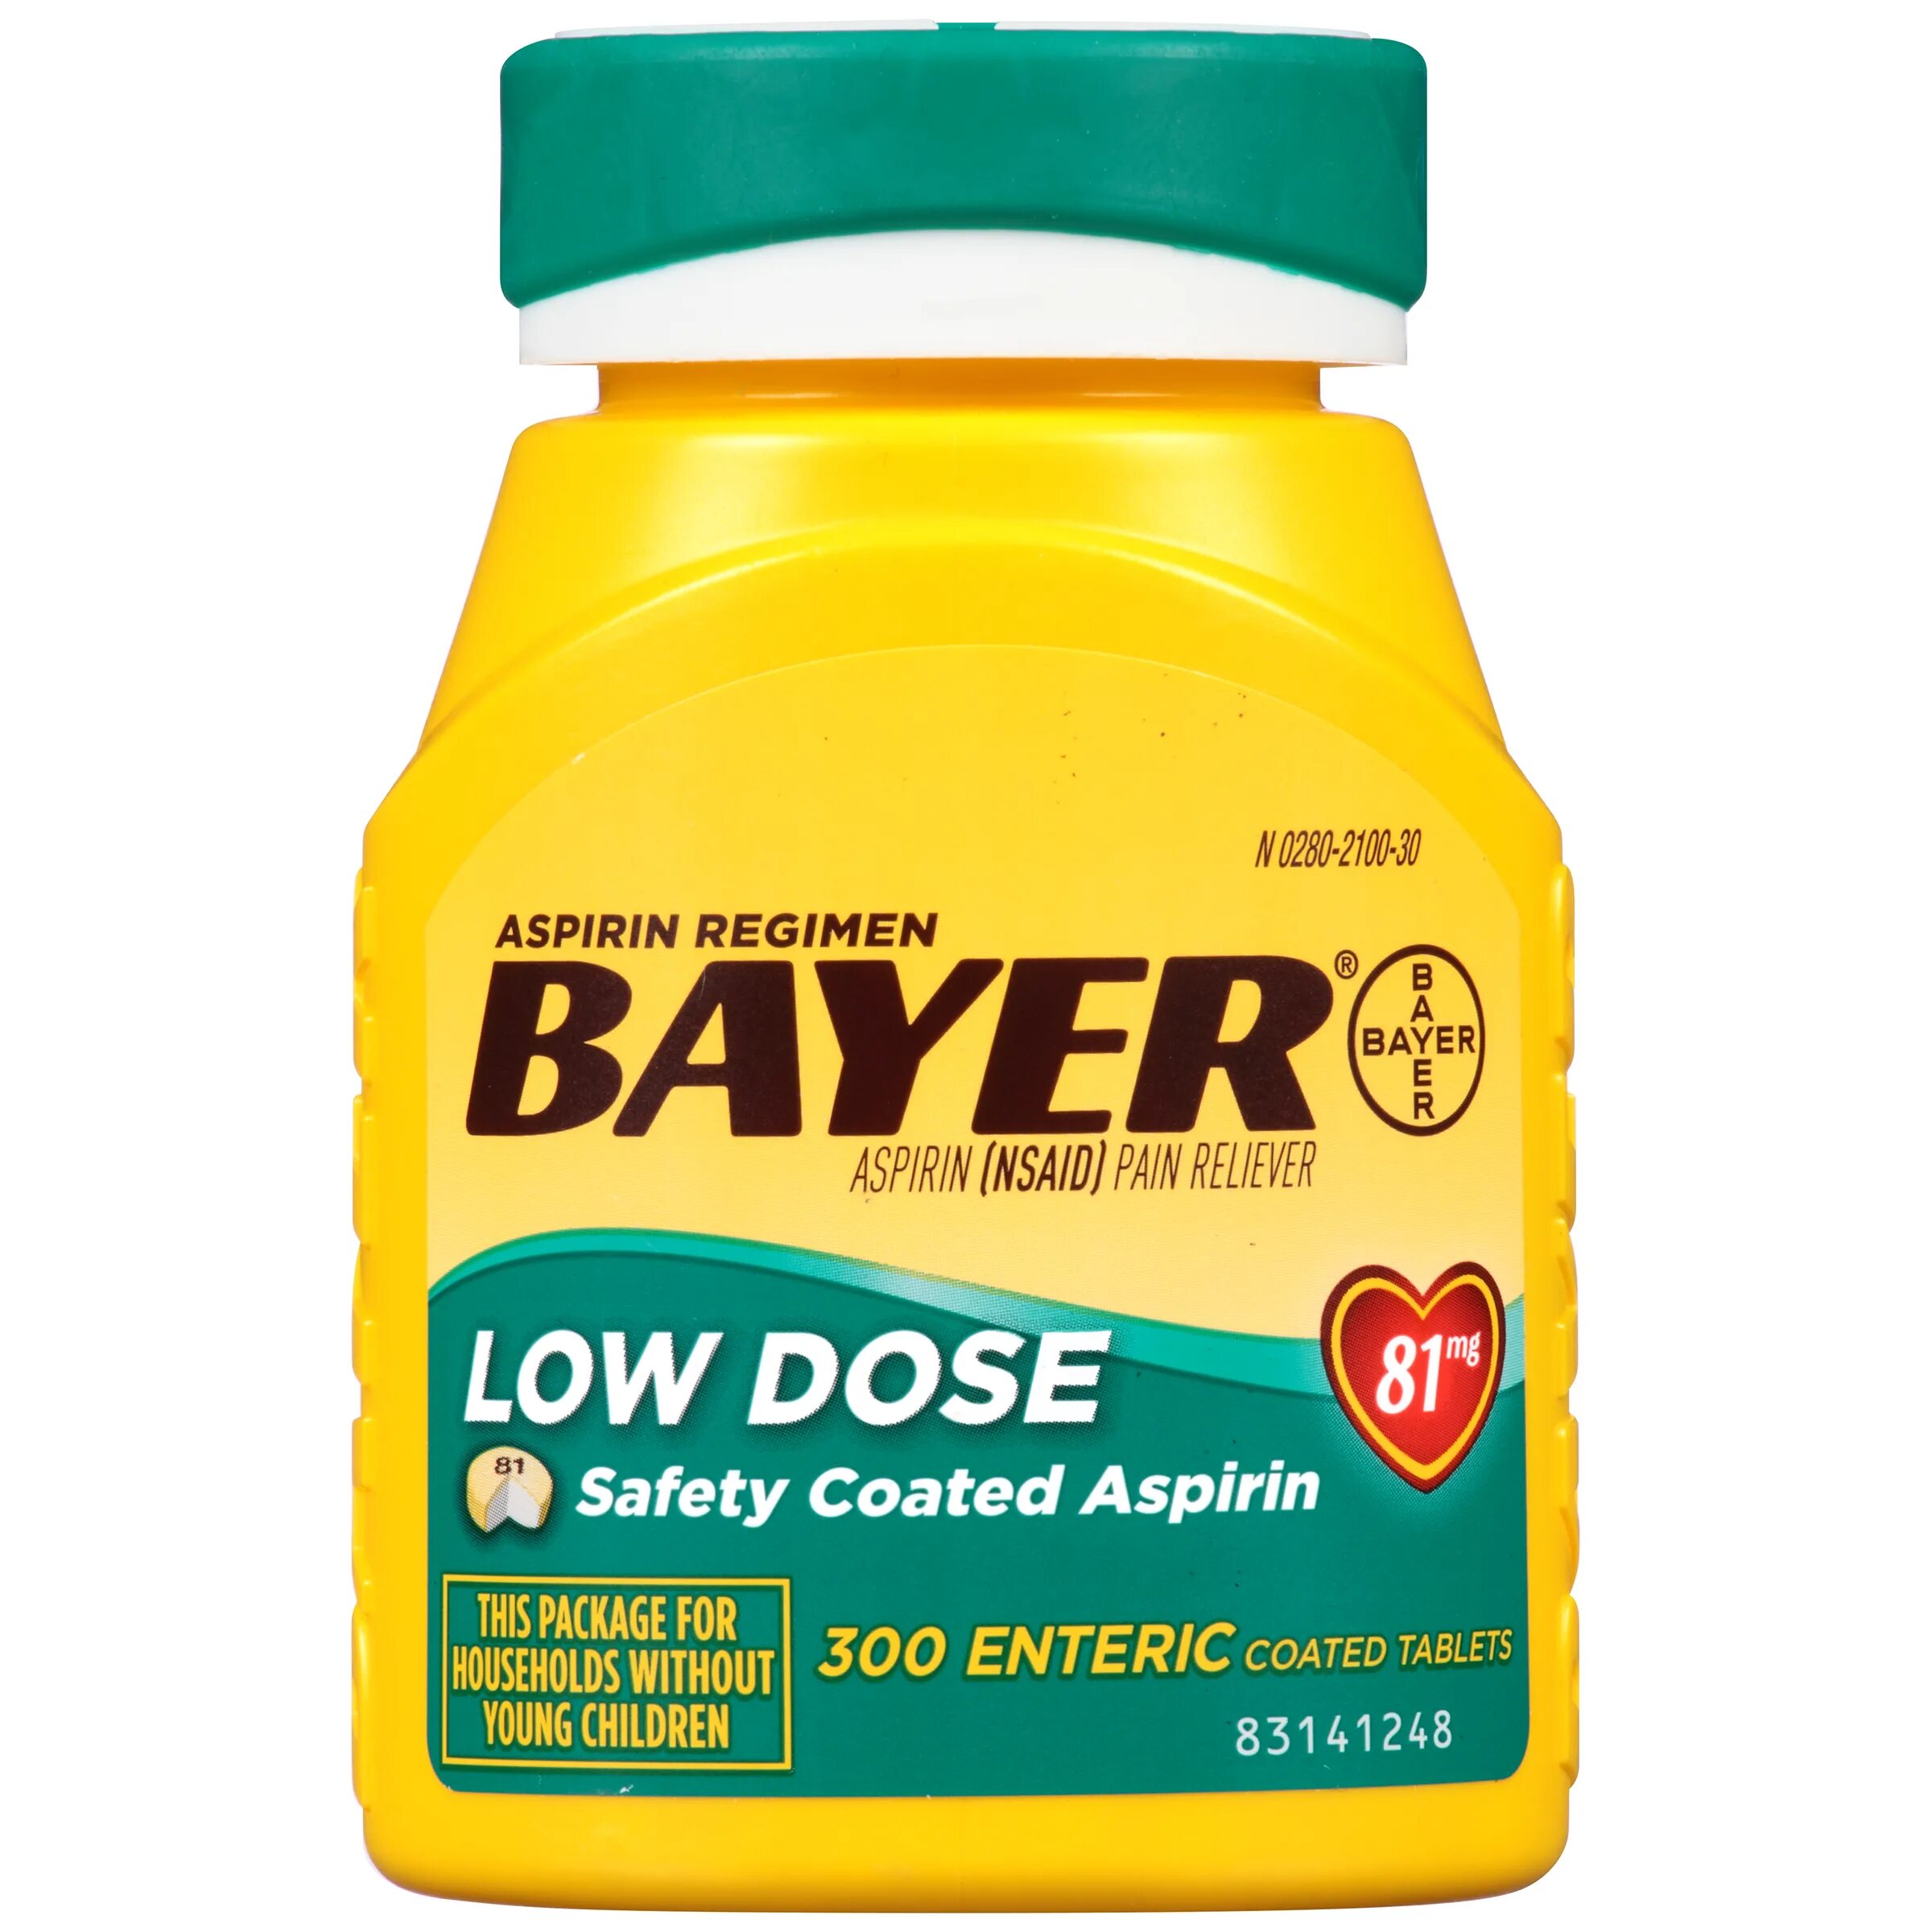 Aspirin Bayer 81mg американский. Аспирин 81 мг американский. Лекарство Bayer Aspirin. Аспирин Байер 75 мг. Аспирин таблетки купить